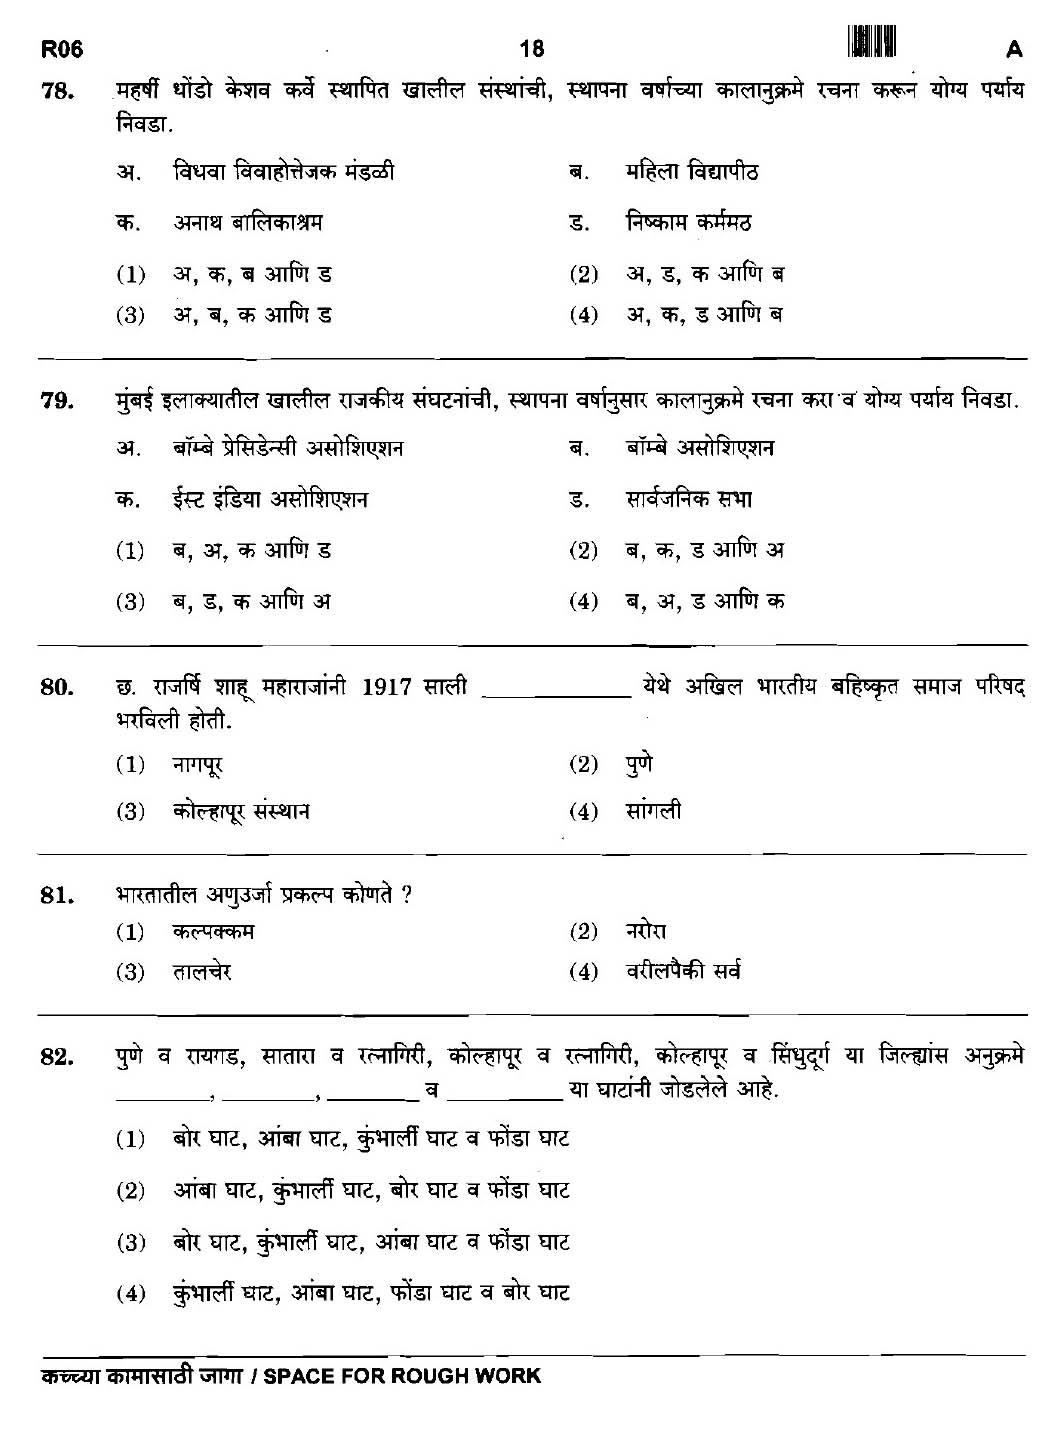 Maharashtra PSC Clerk Typist Exam Question Paper 2015 17